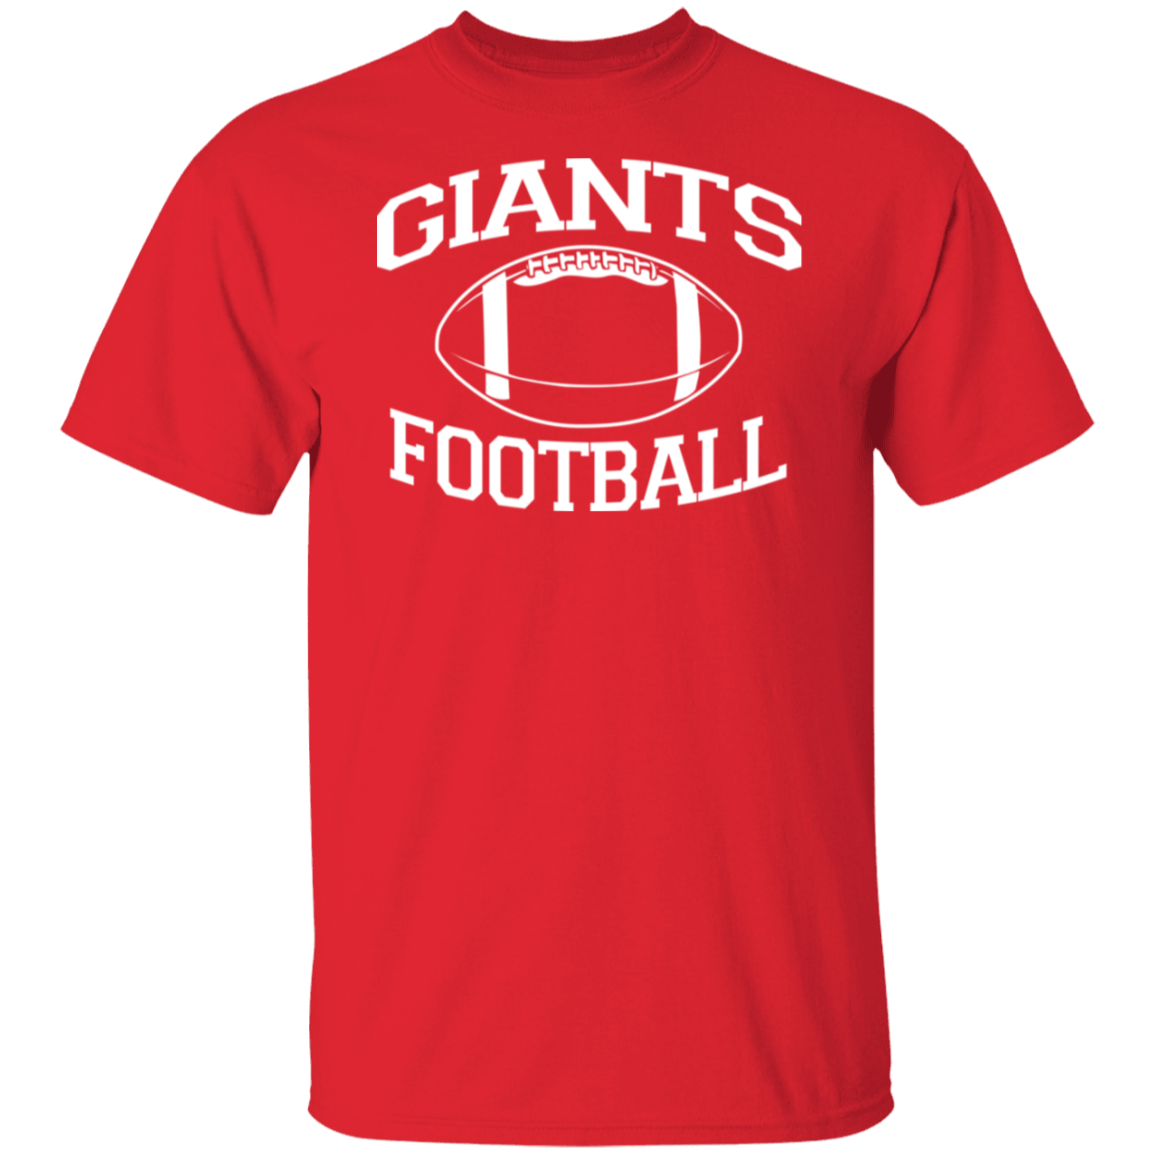 Giants Football White Print T-Shirt